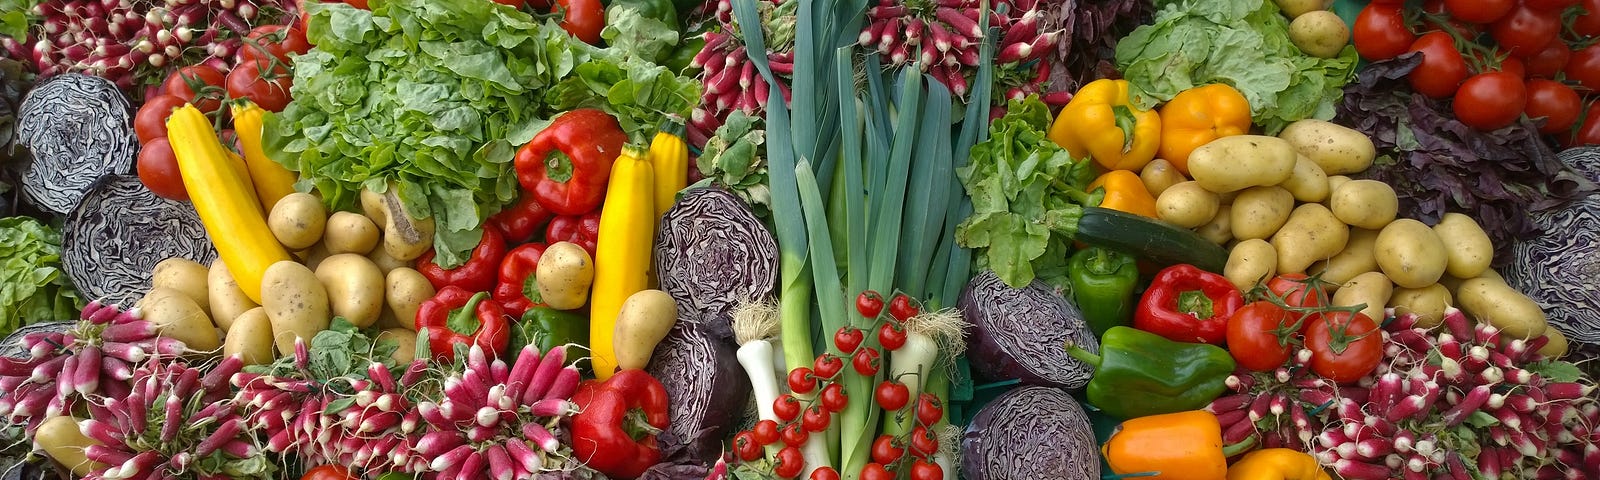 variety of vegetables